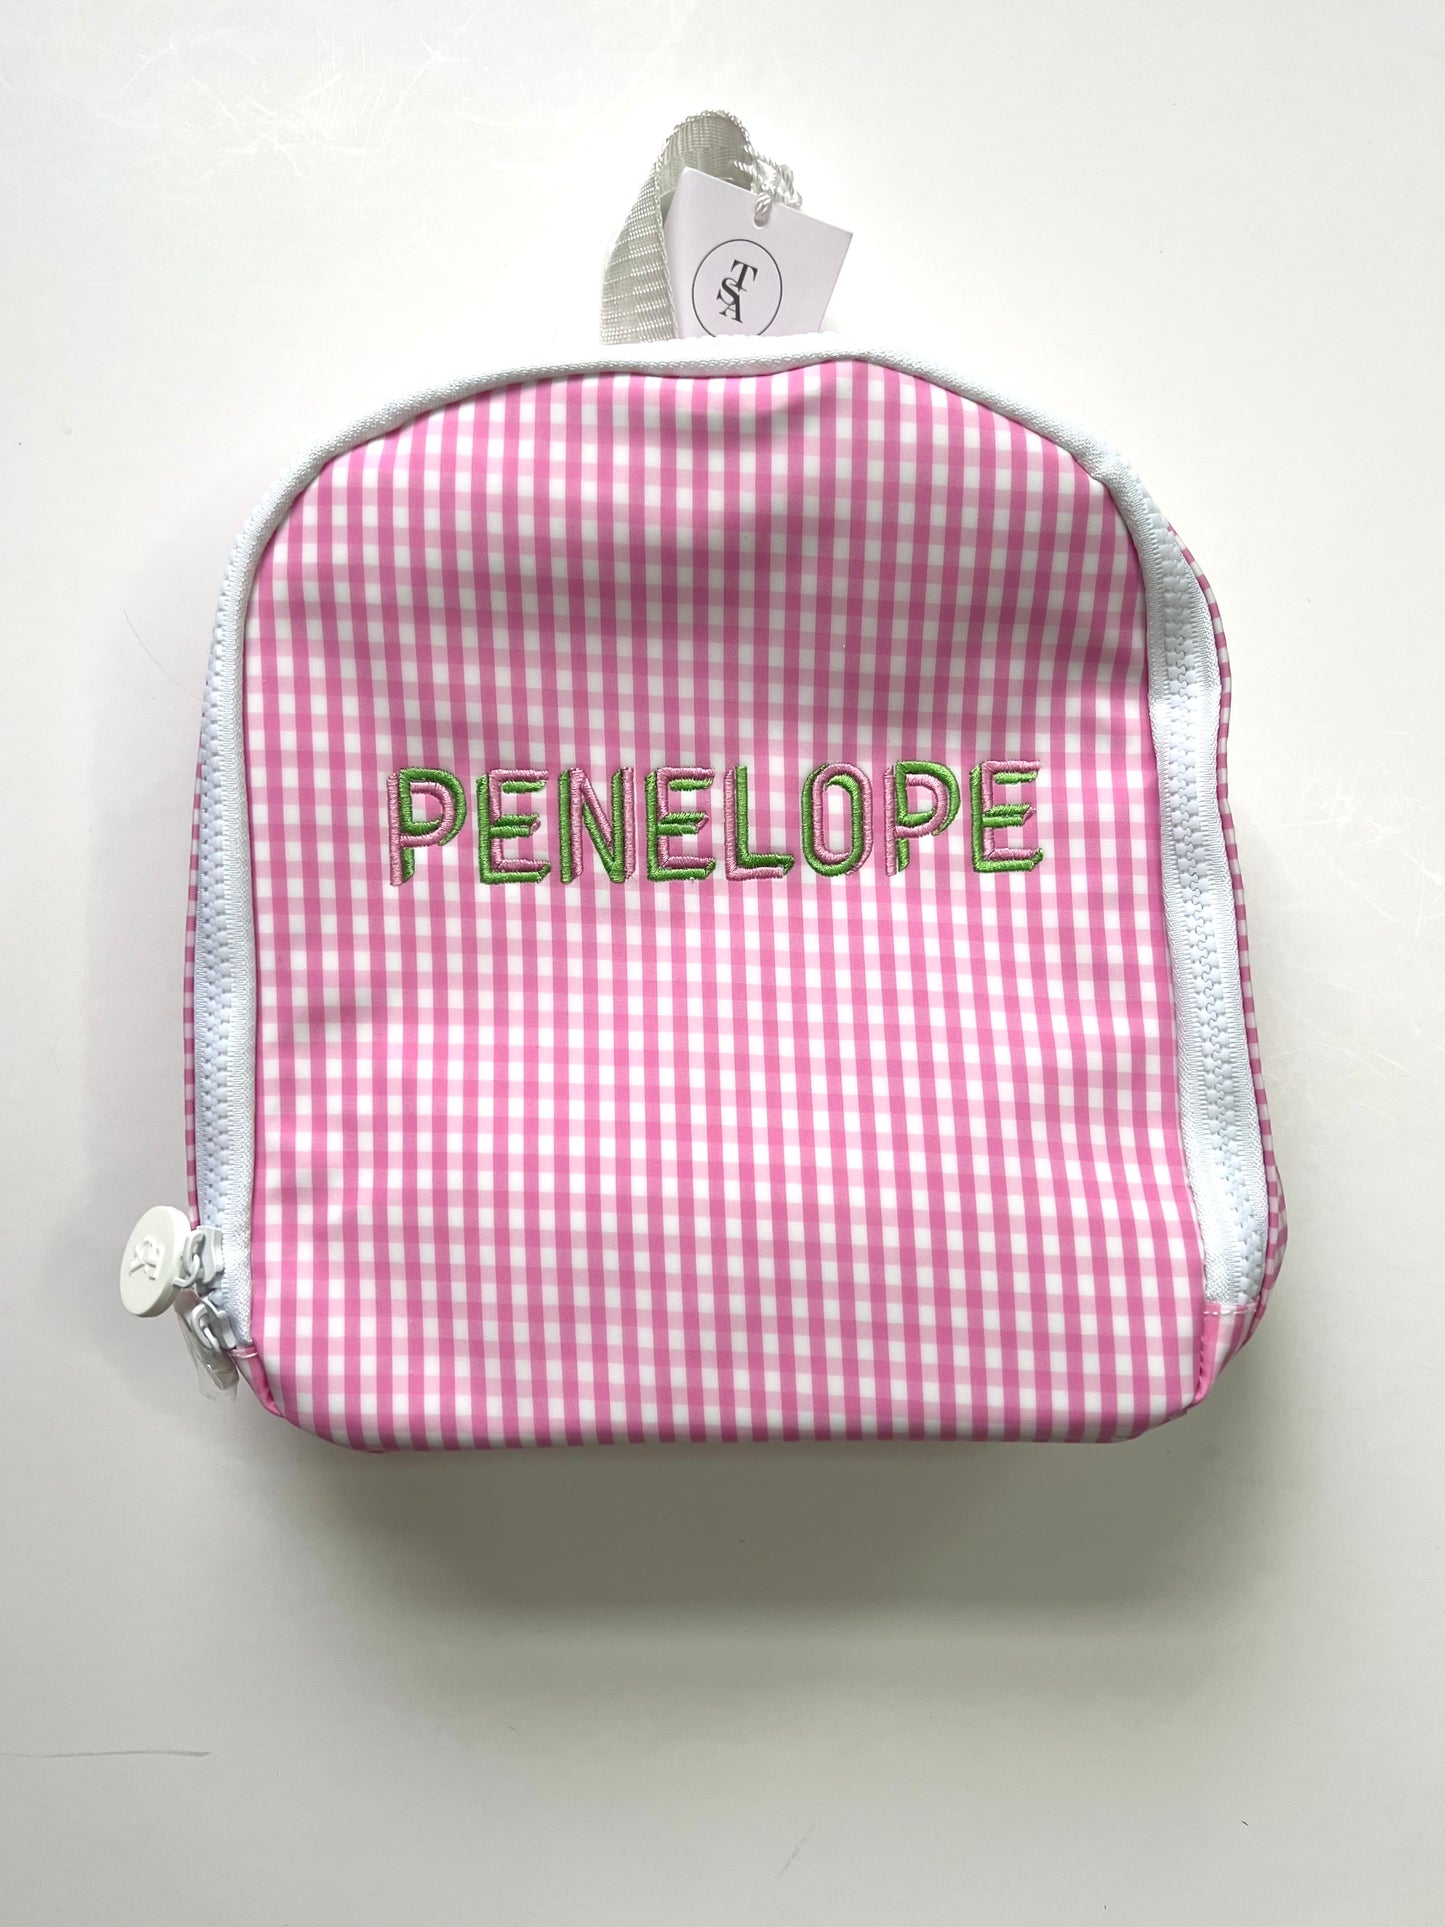 TRVL Design Insulated Lunch Bag